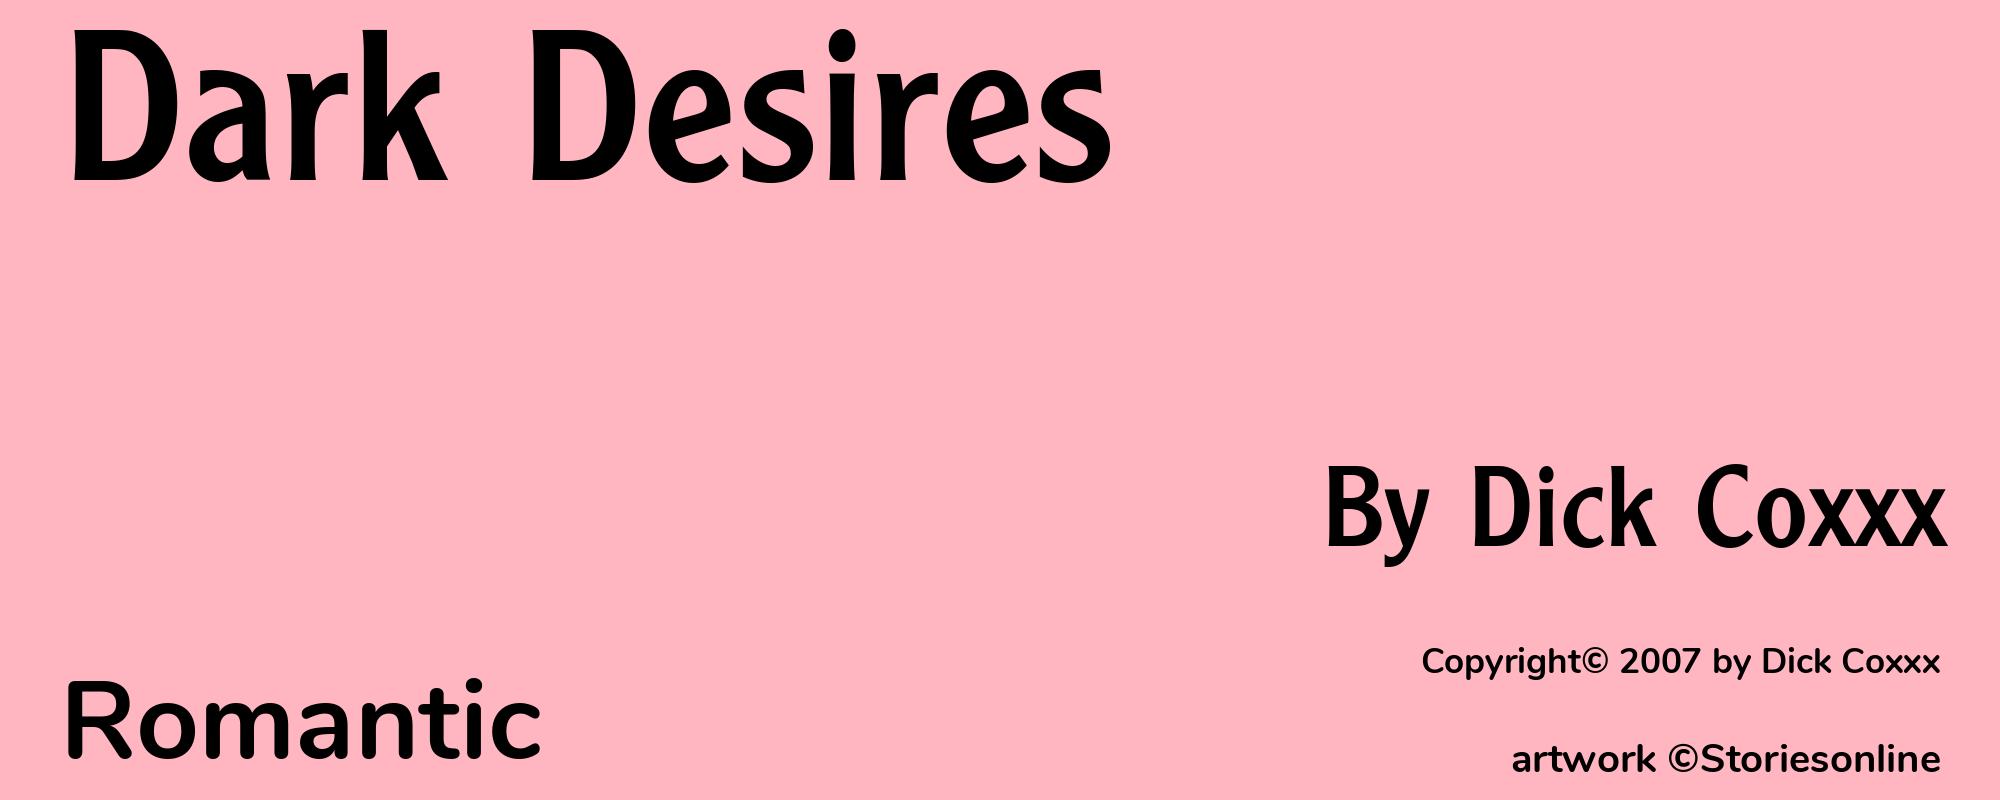 Dark Desires - Cover